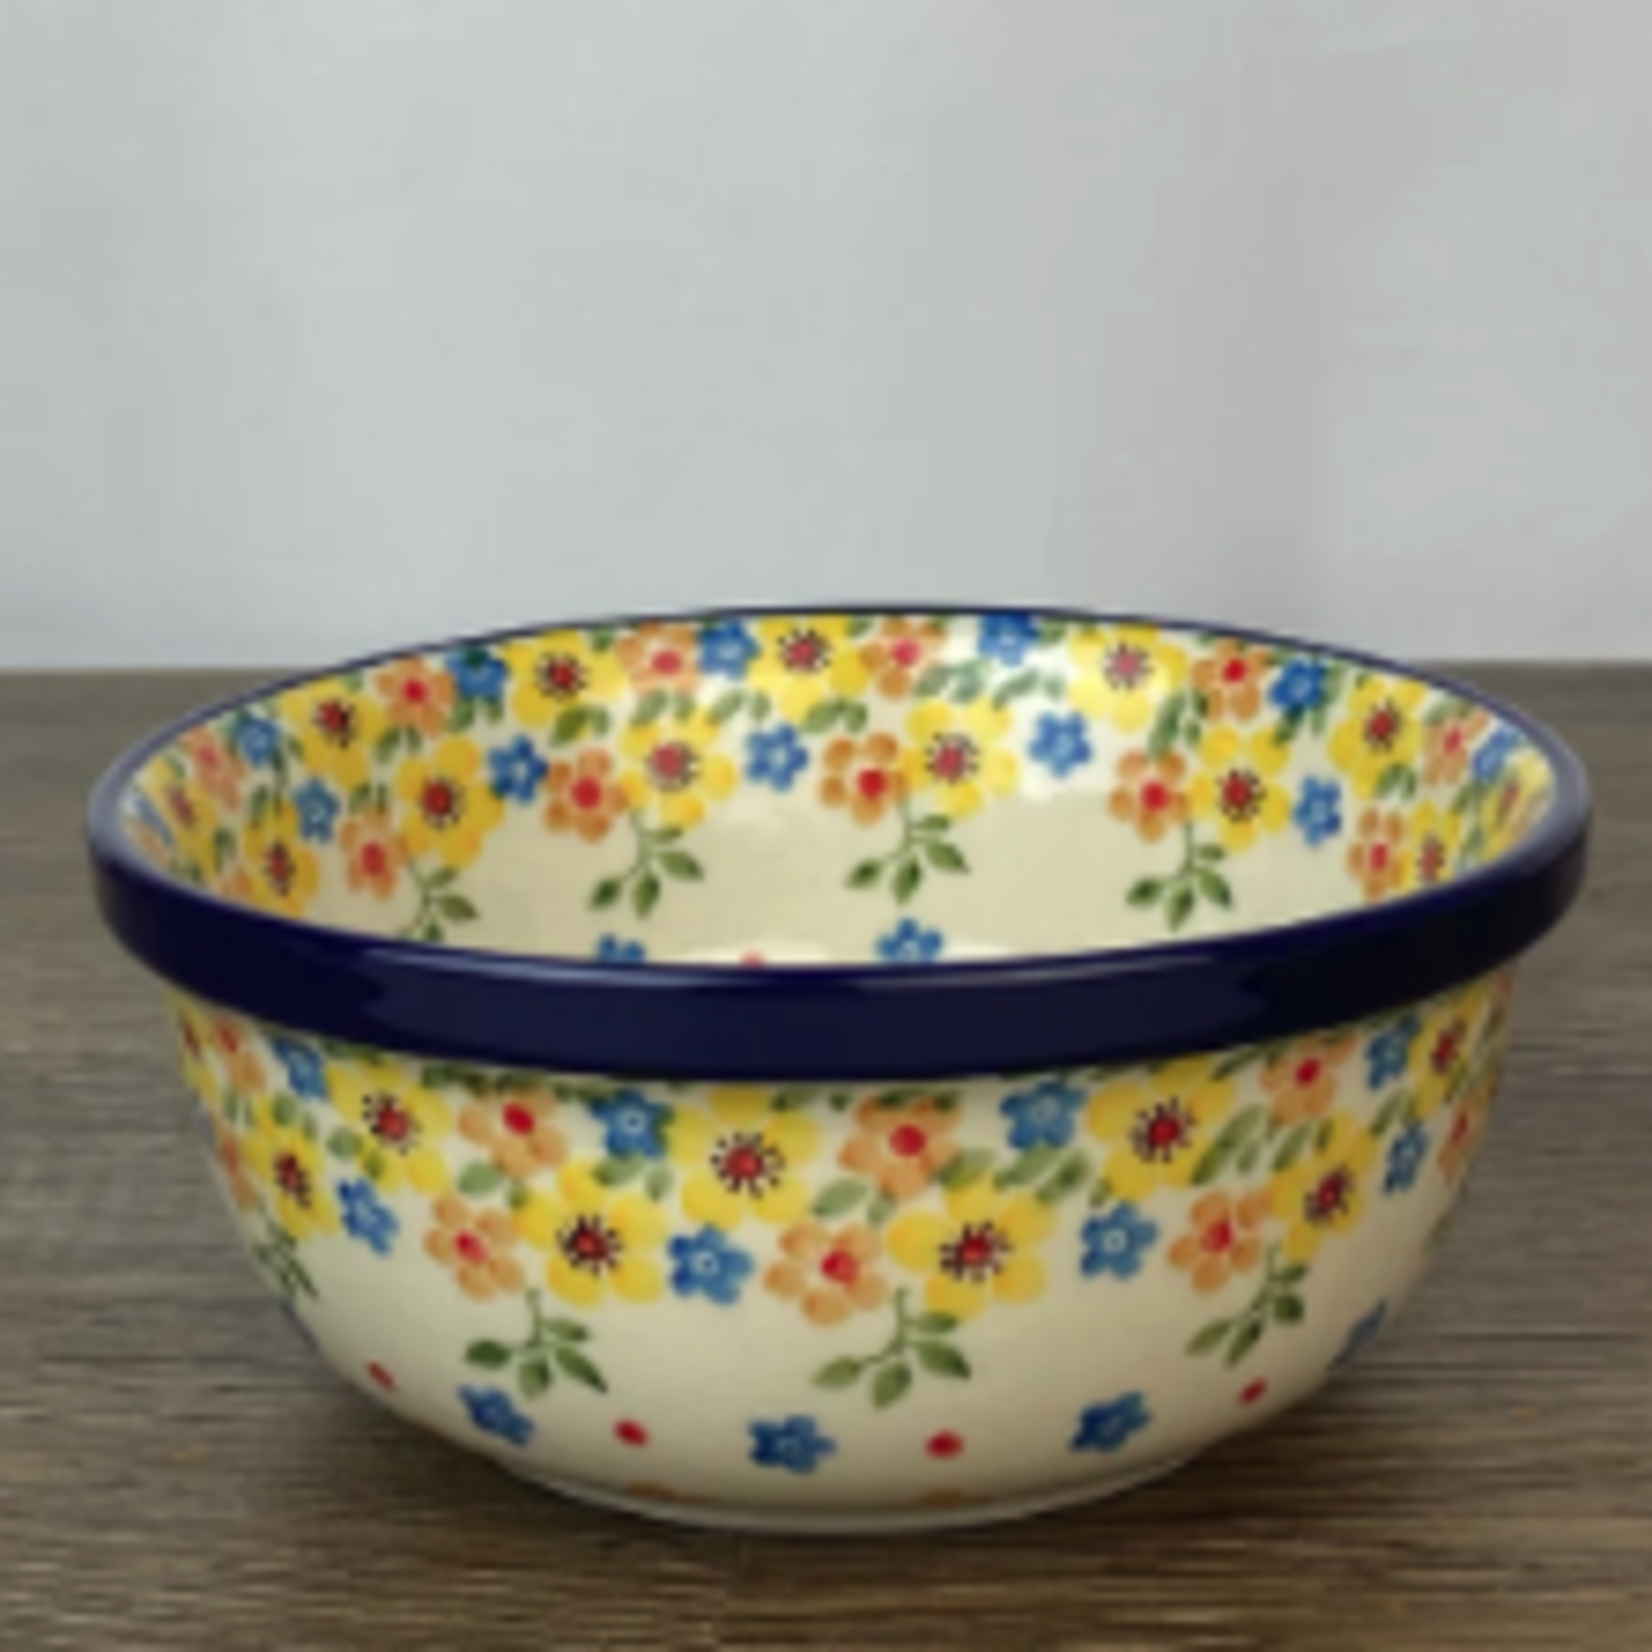 European Design Imports Inc. Polish Pottery Cereal Bowl, 14oz, Spring